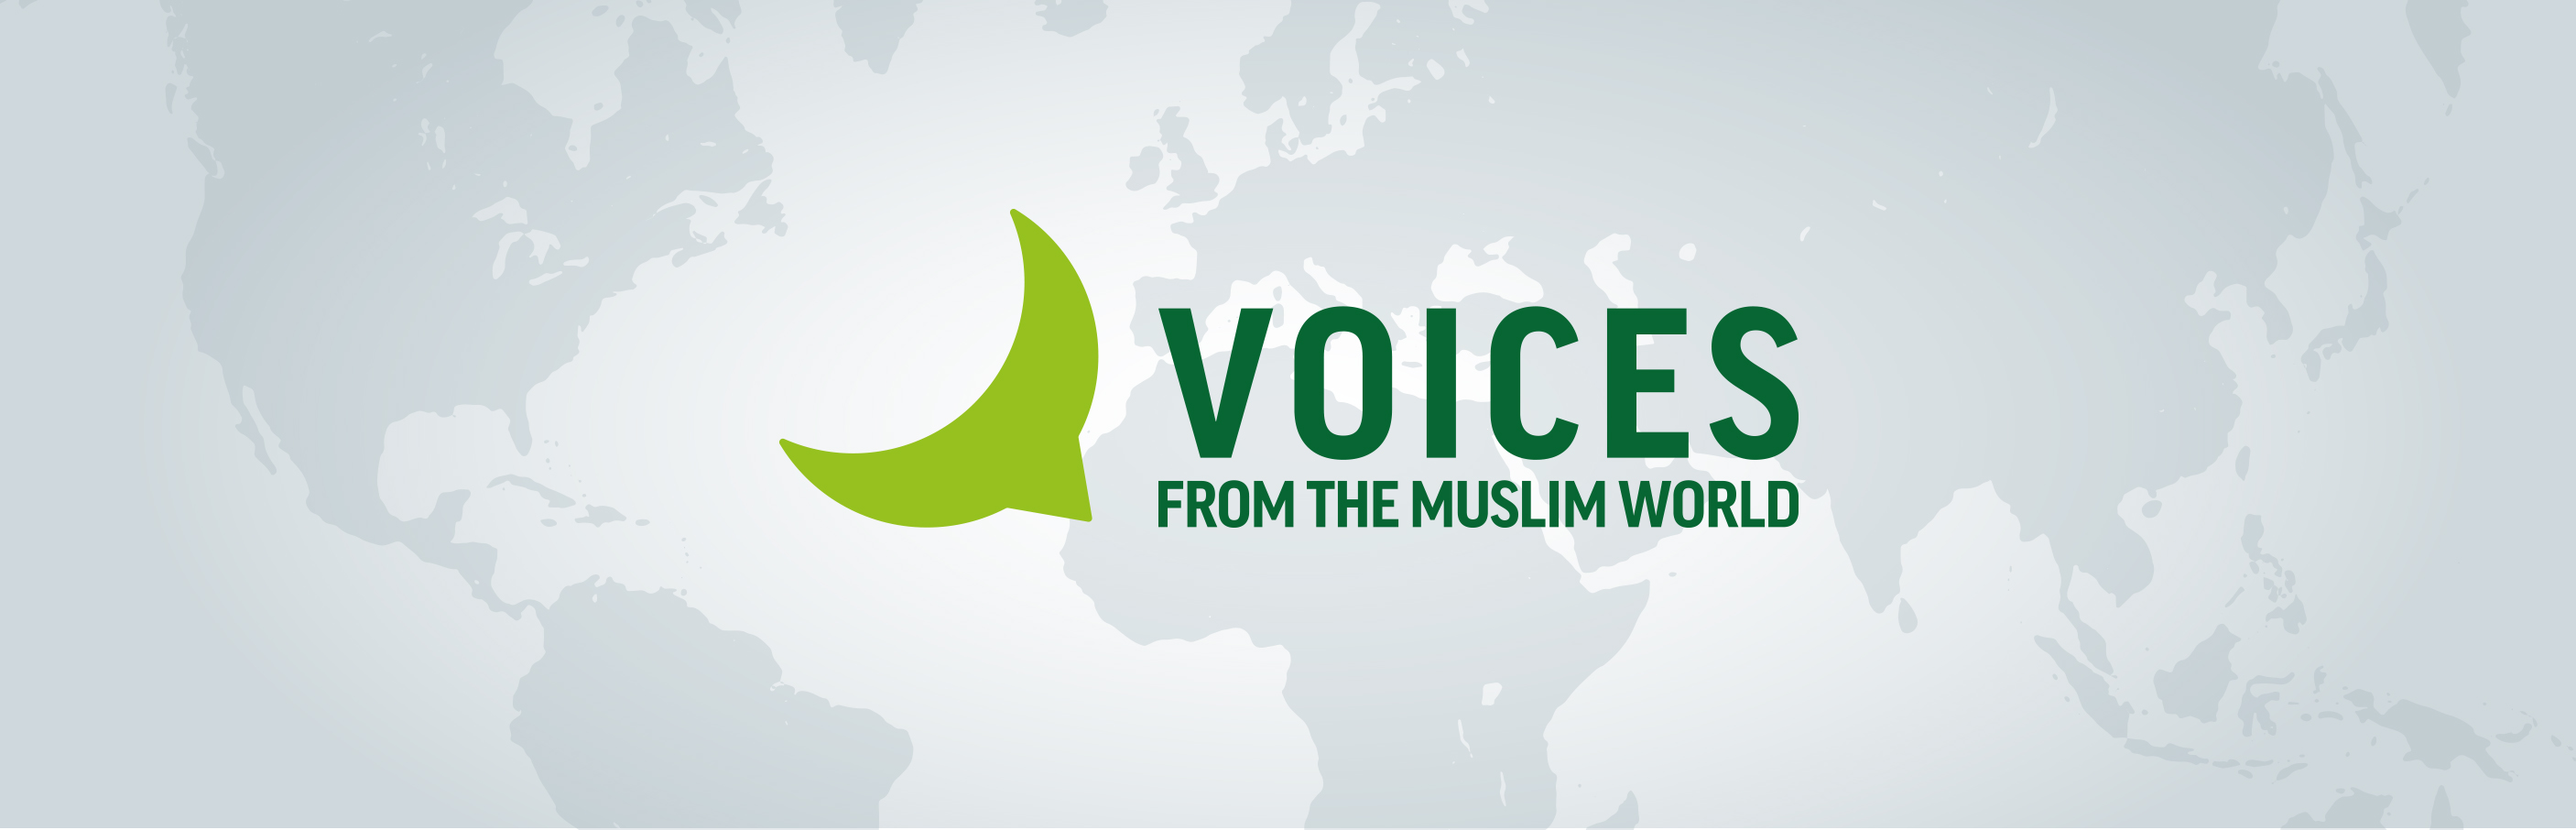 Voices From the Muslim World İlk Program Yayımlandı